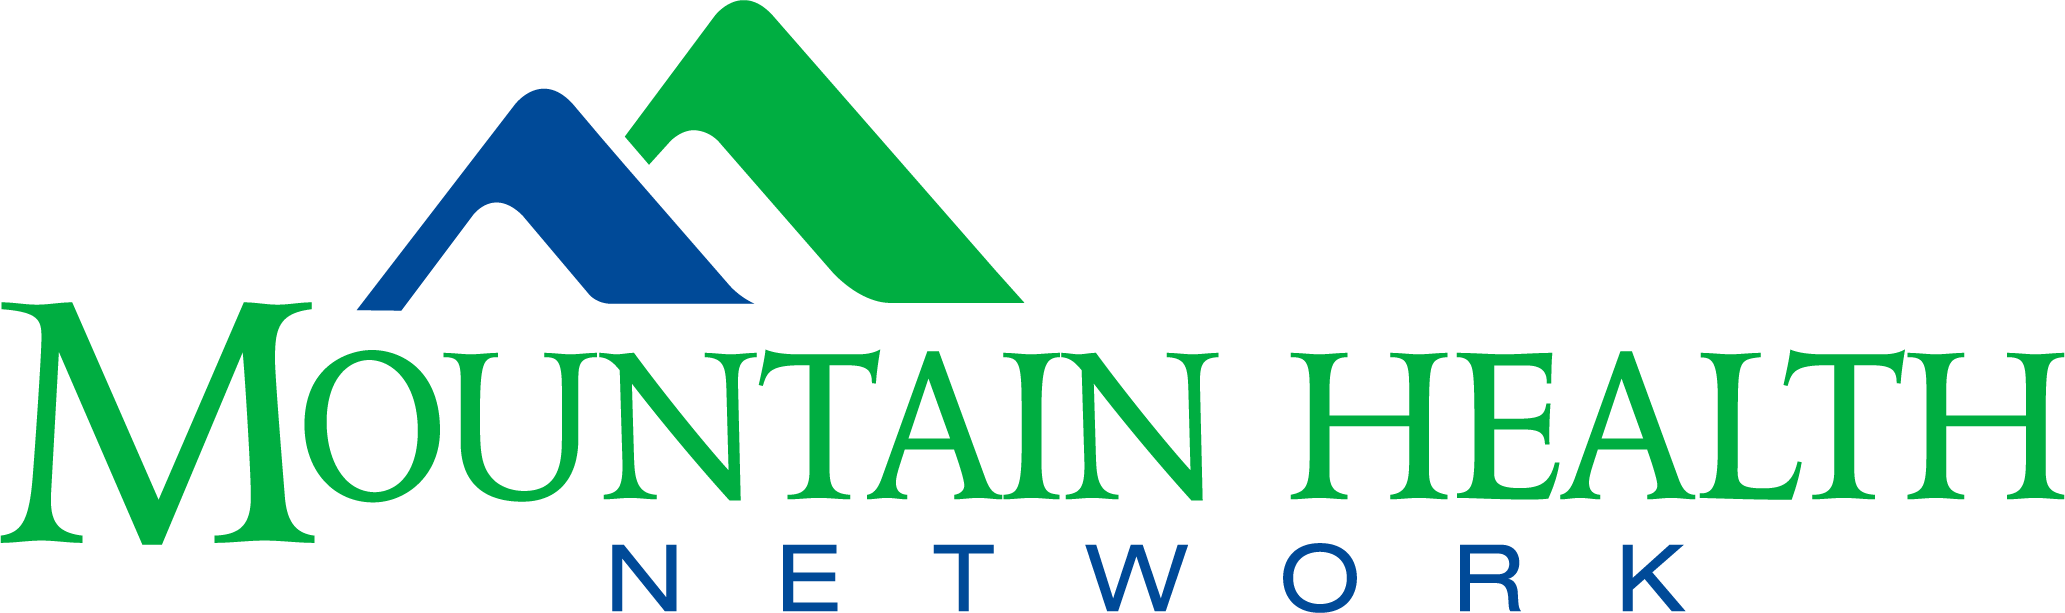 Mountain Health Network logo